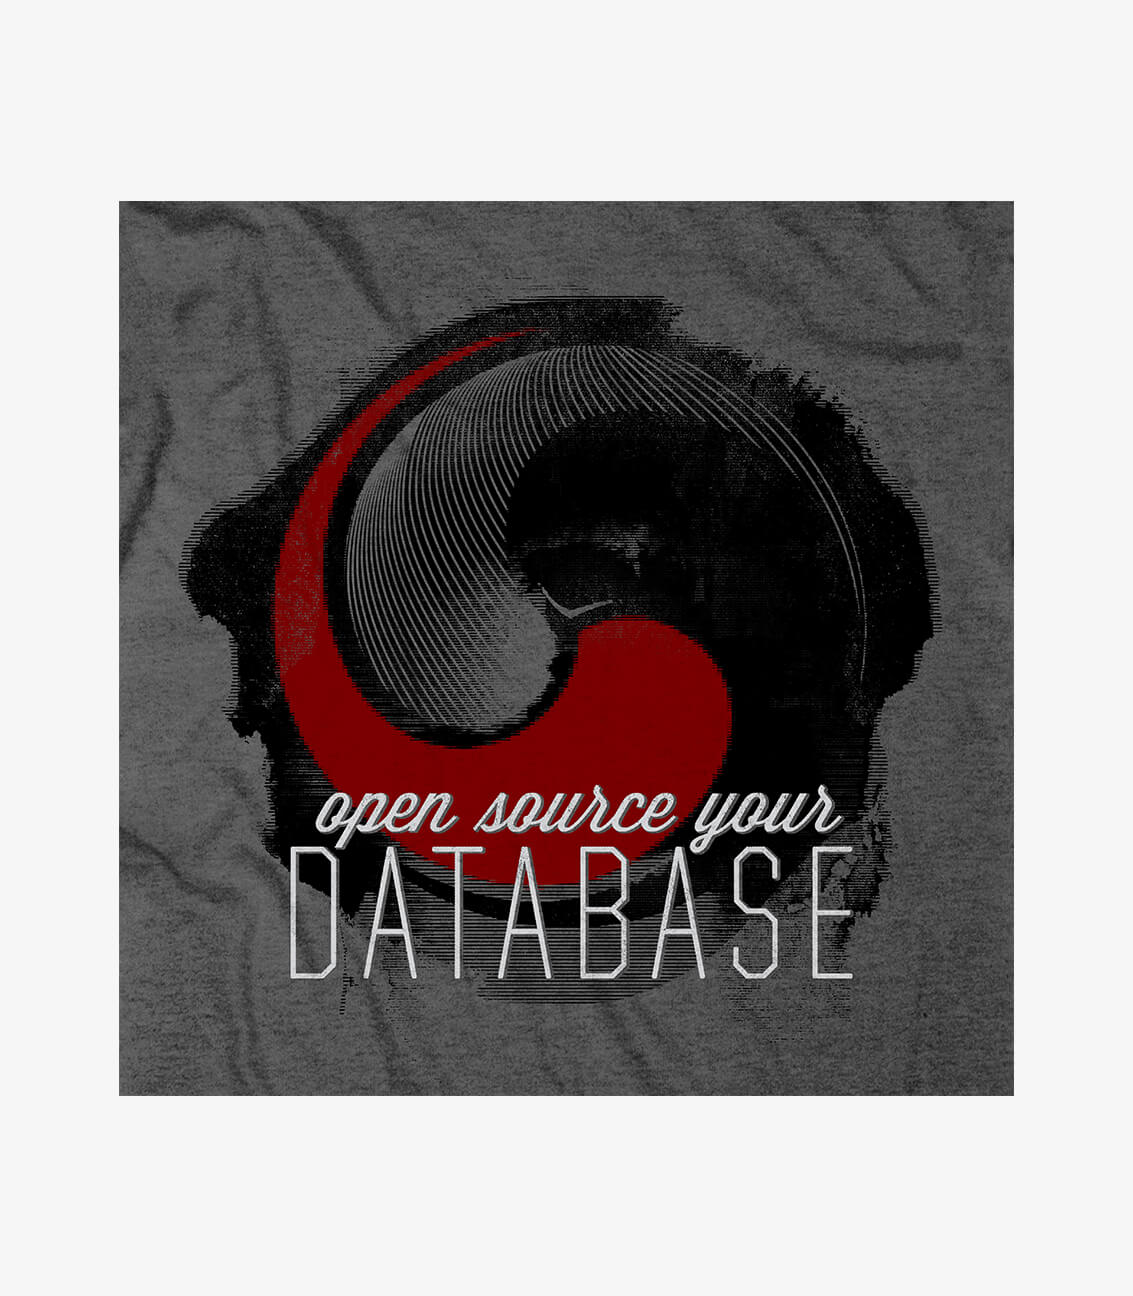 Database shirt graphic art design for Salesforce Computing in San Francisco, California